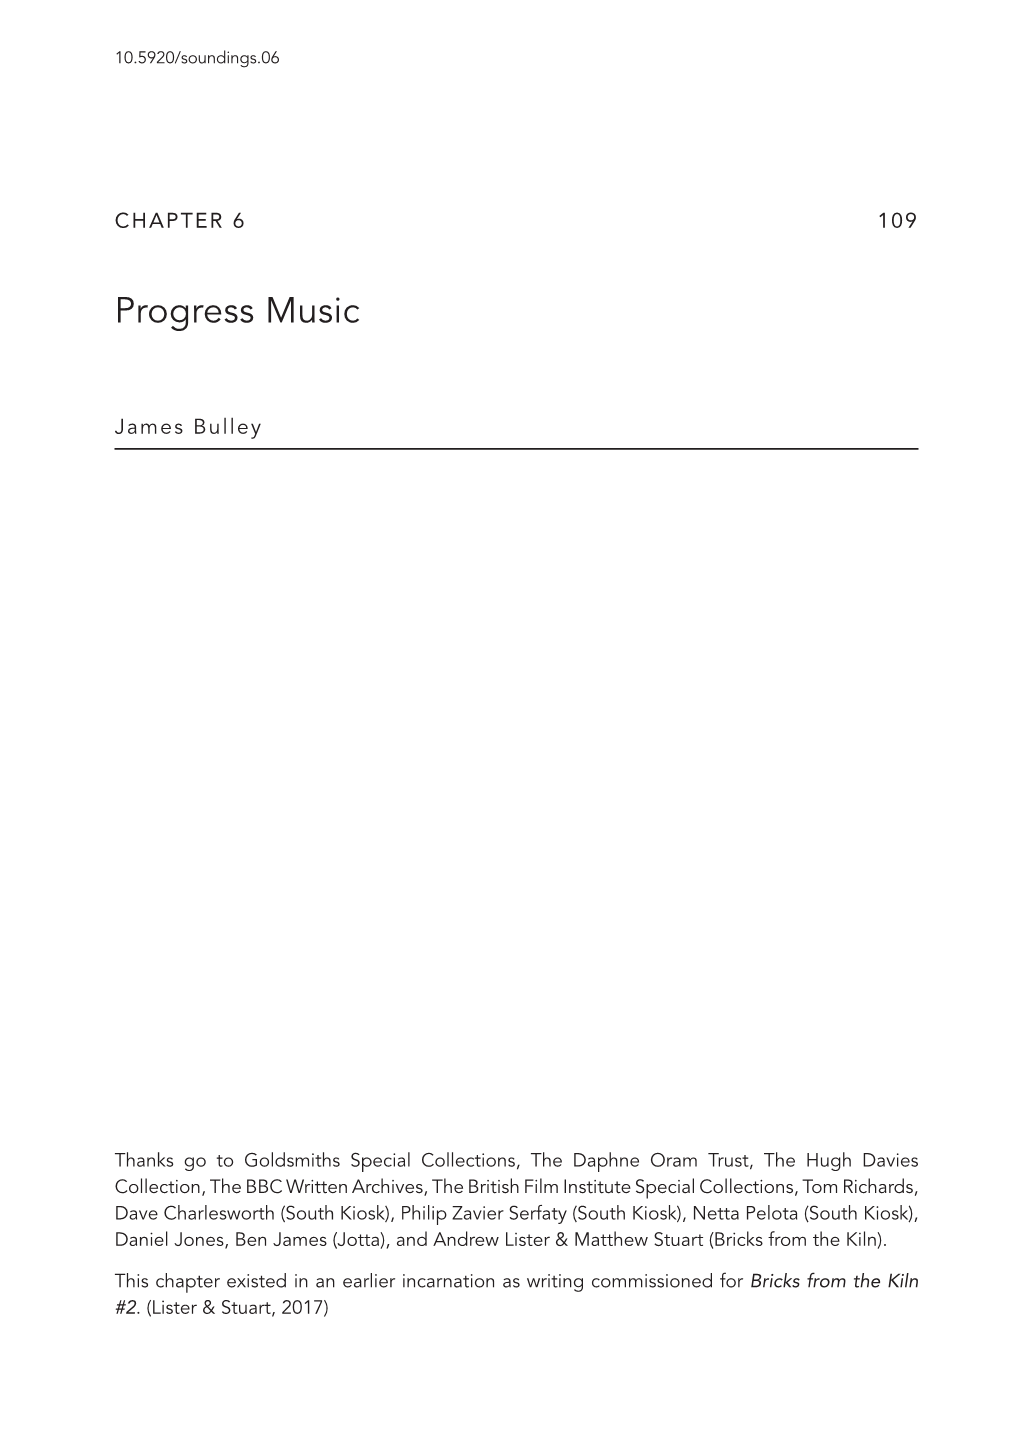 Progress Music